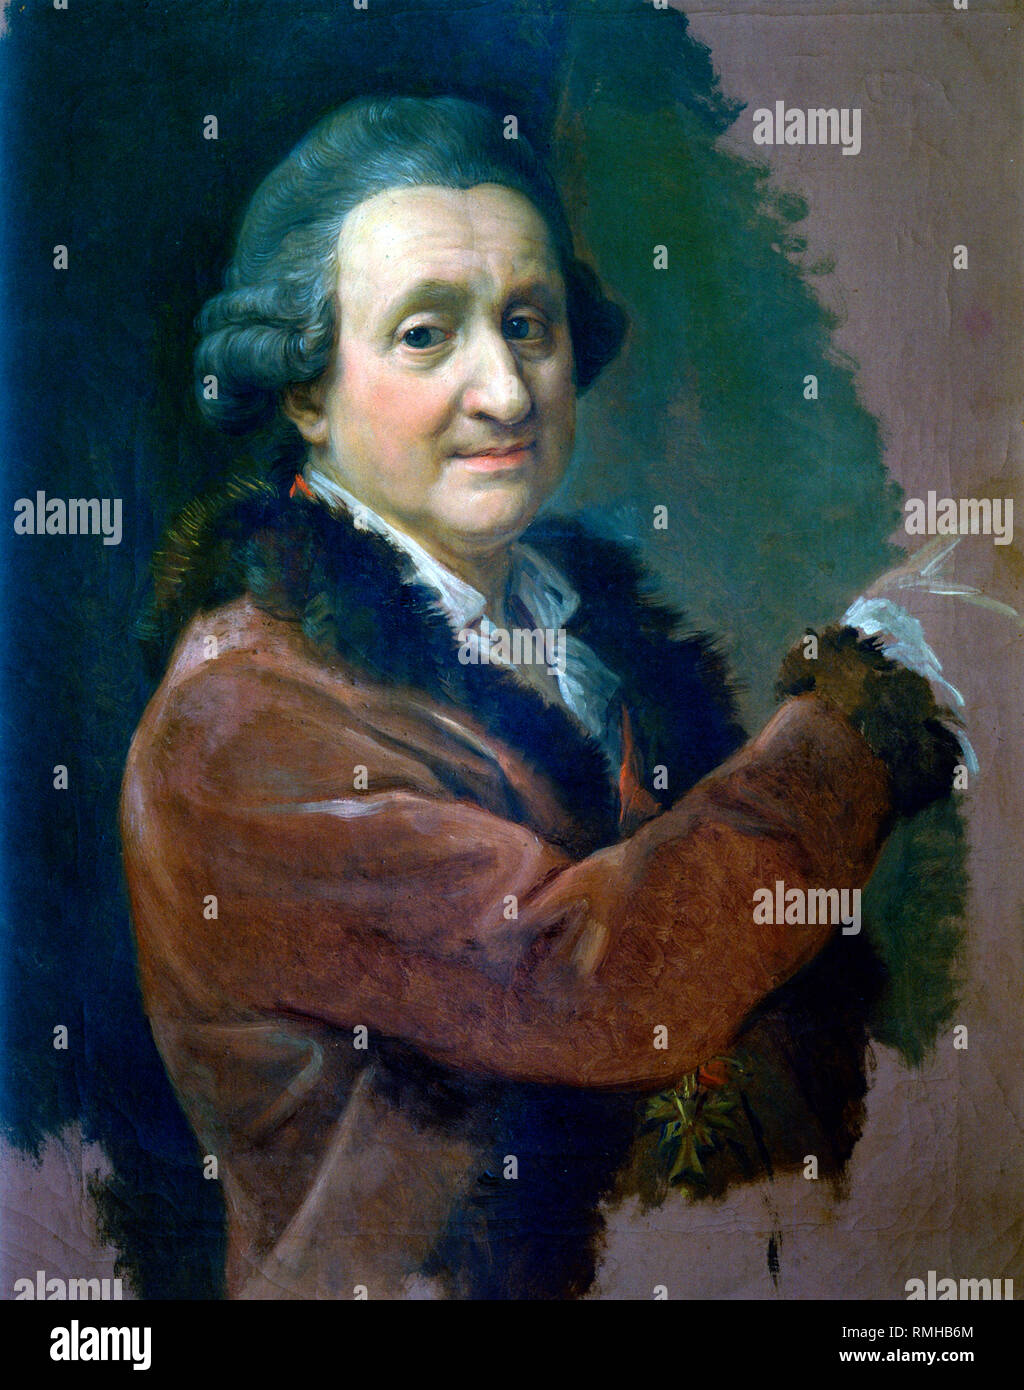 Girolamo Pompeo Batoni (1708 - 1787), artista pintor italiano autorretrato Foto de stock